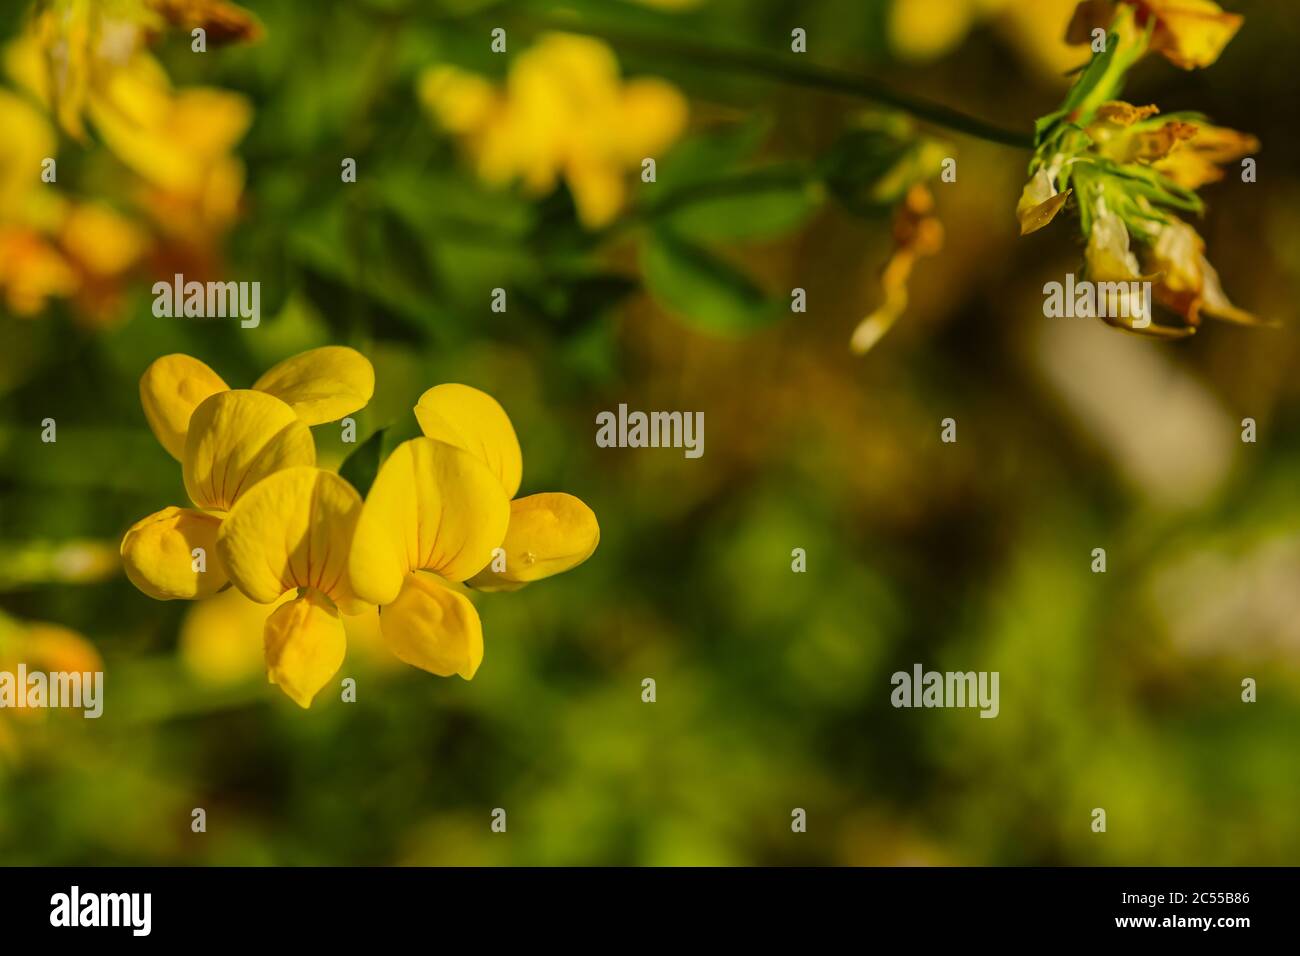 Lotus corniculatus a perennial herbaceous flowering plant in the pea family Fabaceae macro close-up Stock Photo